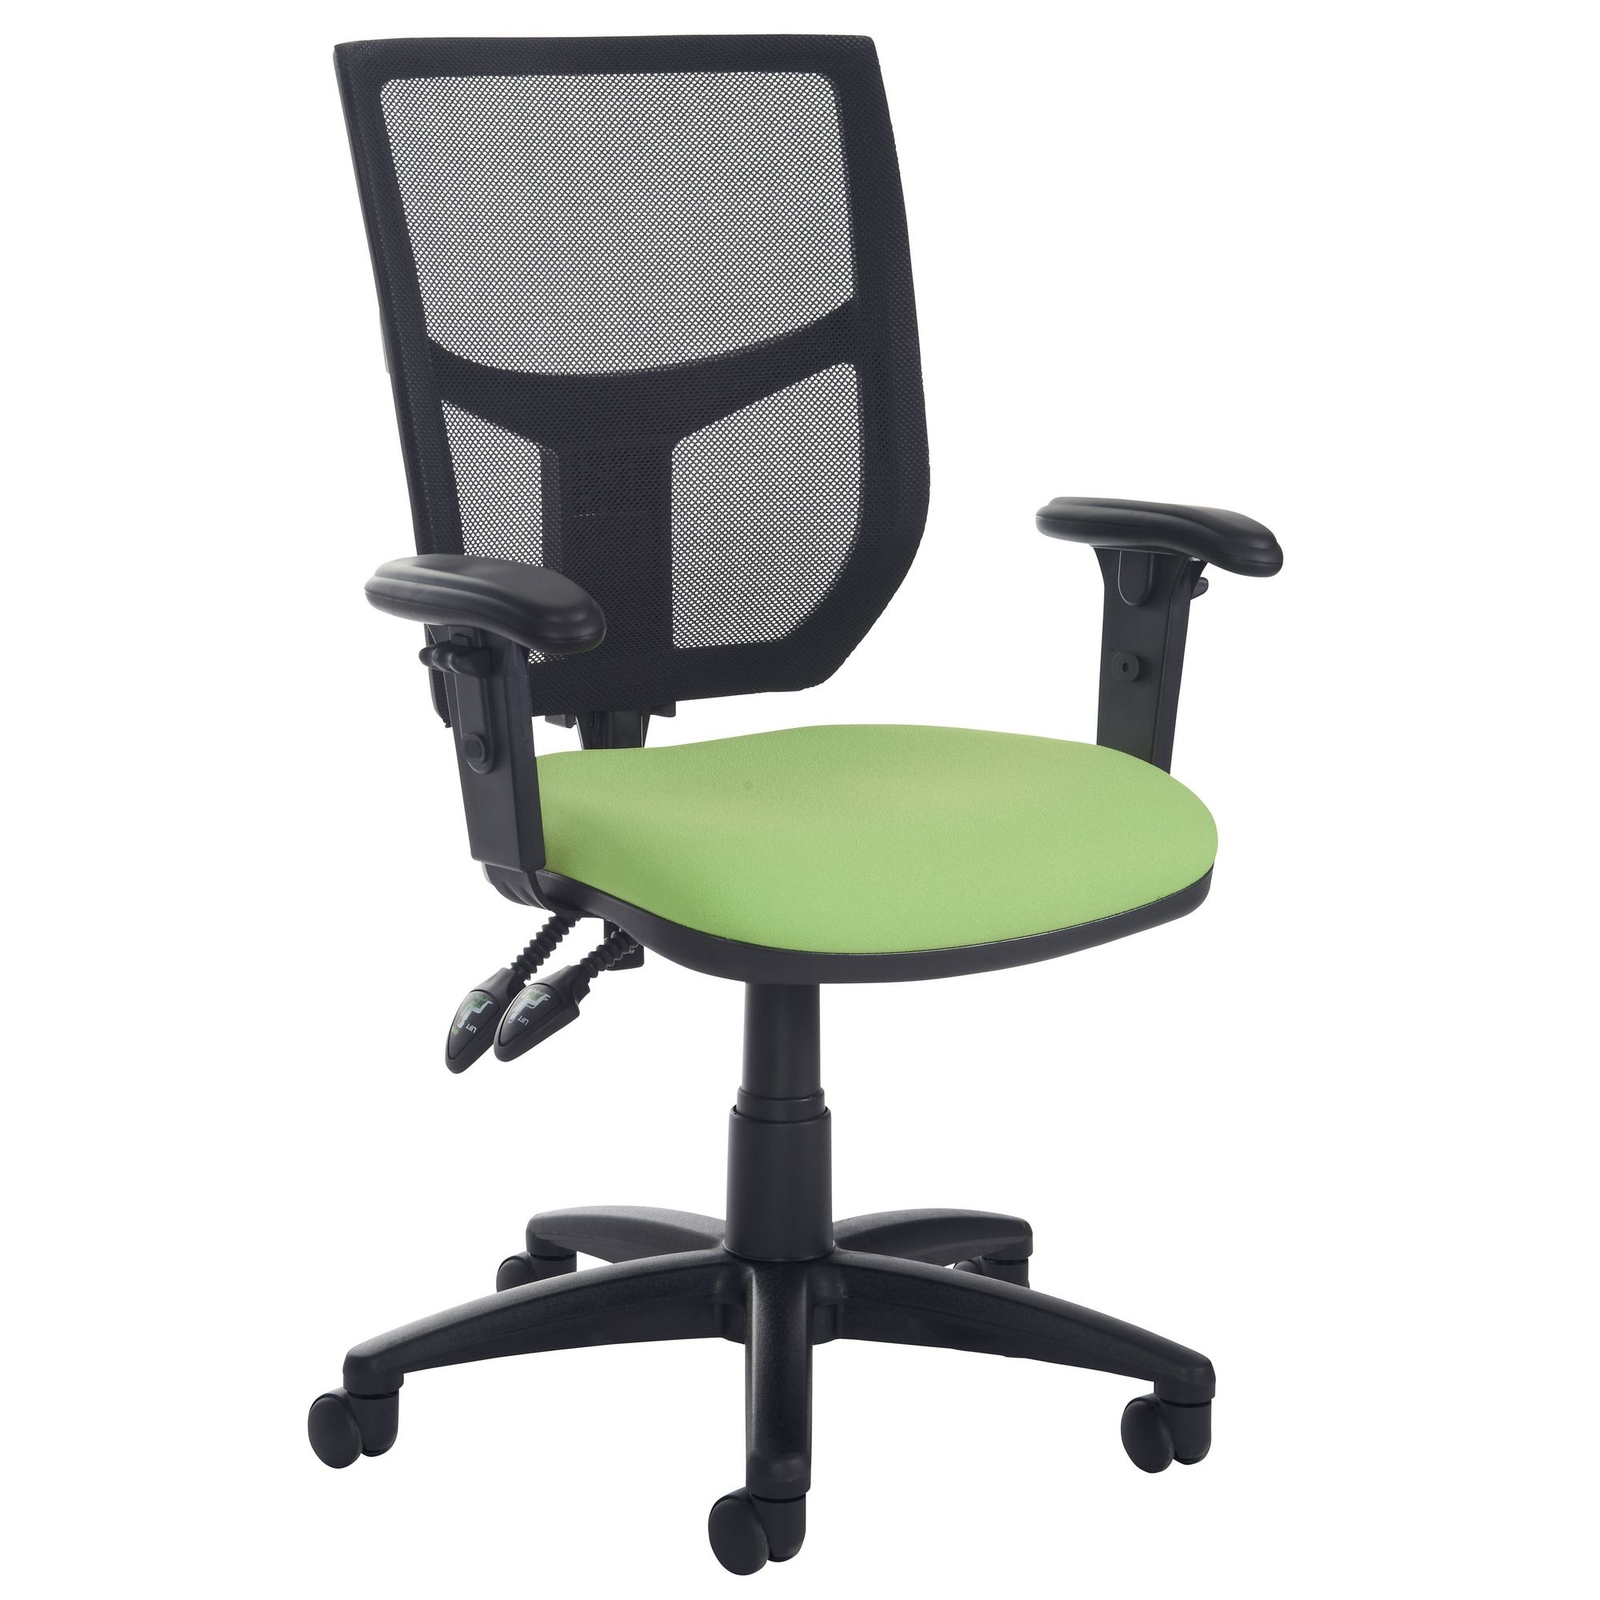 Altino High Back Operator's Chair - Green